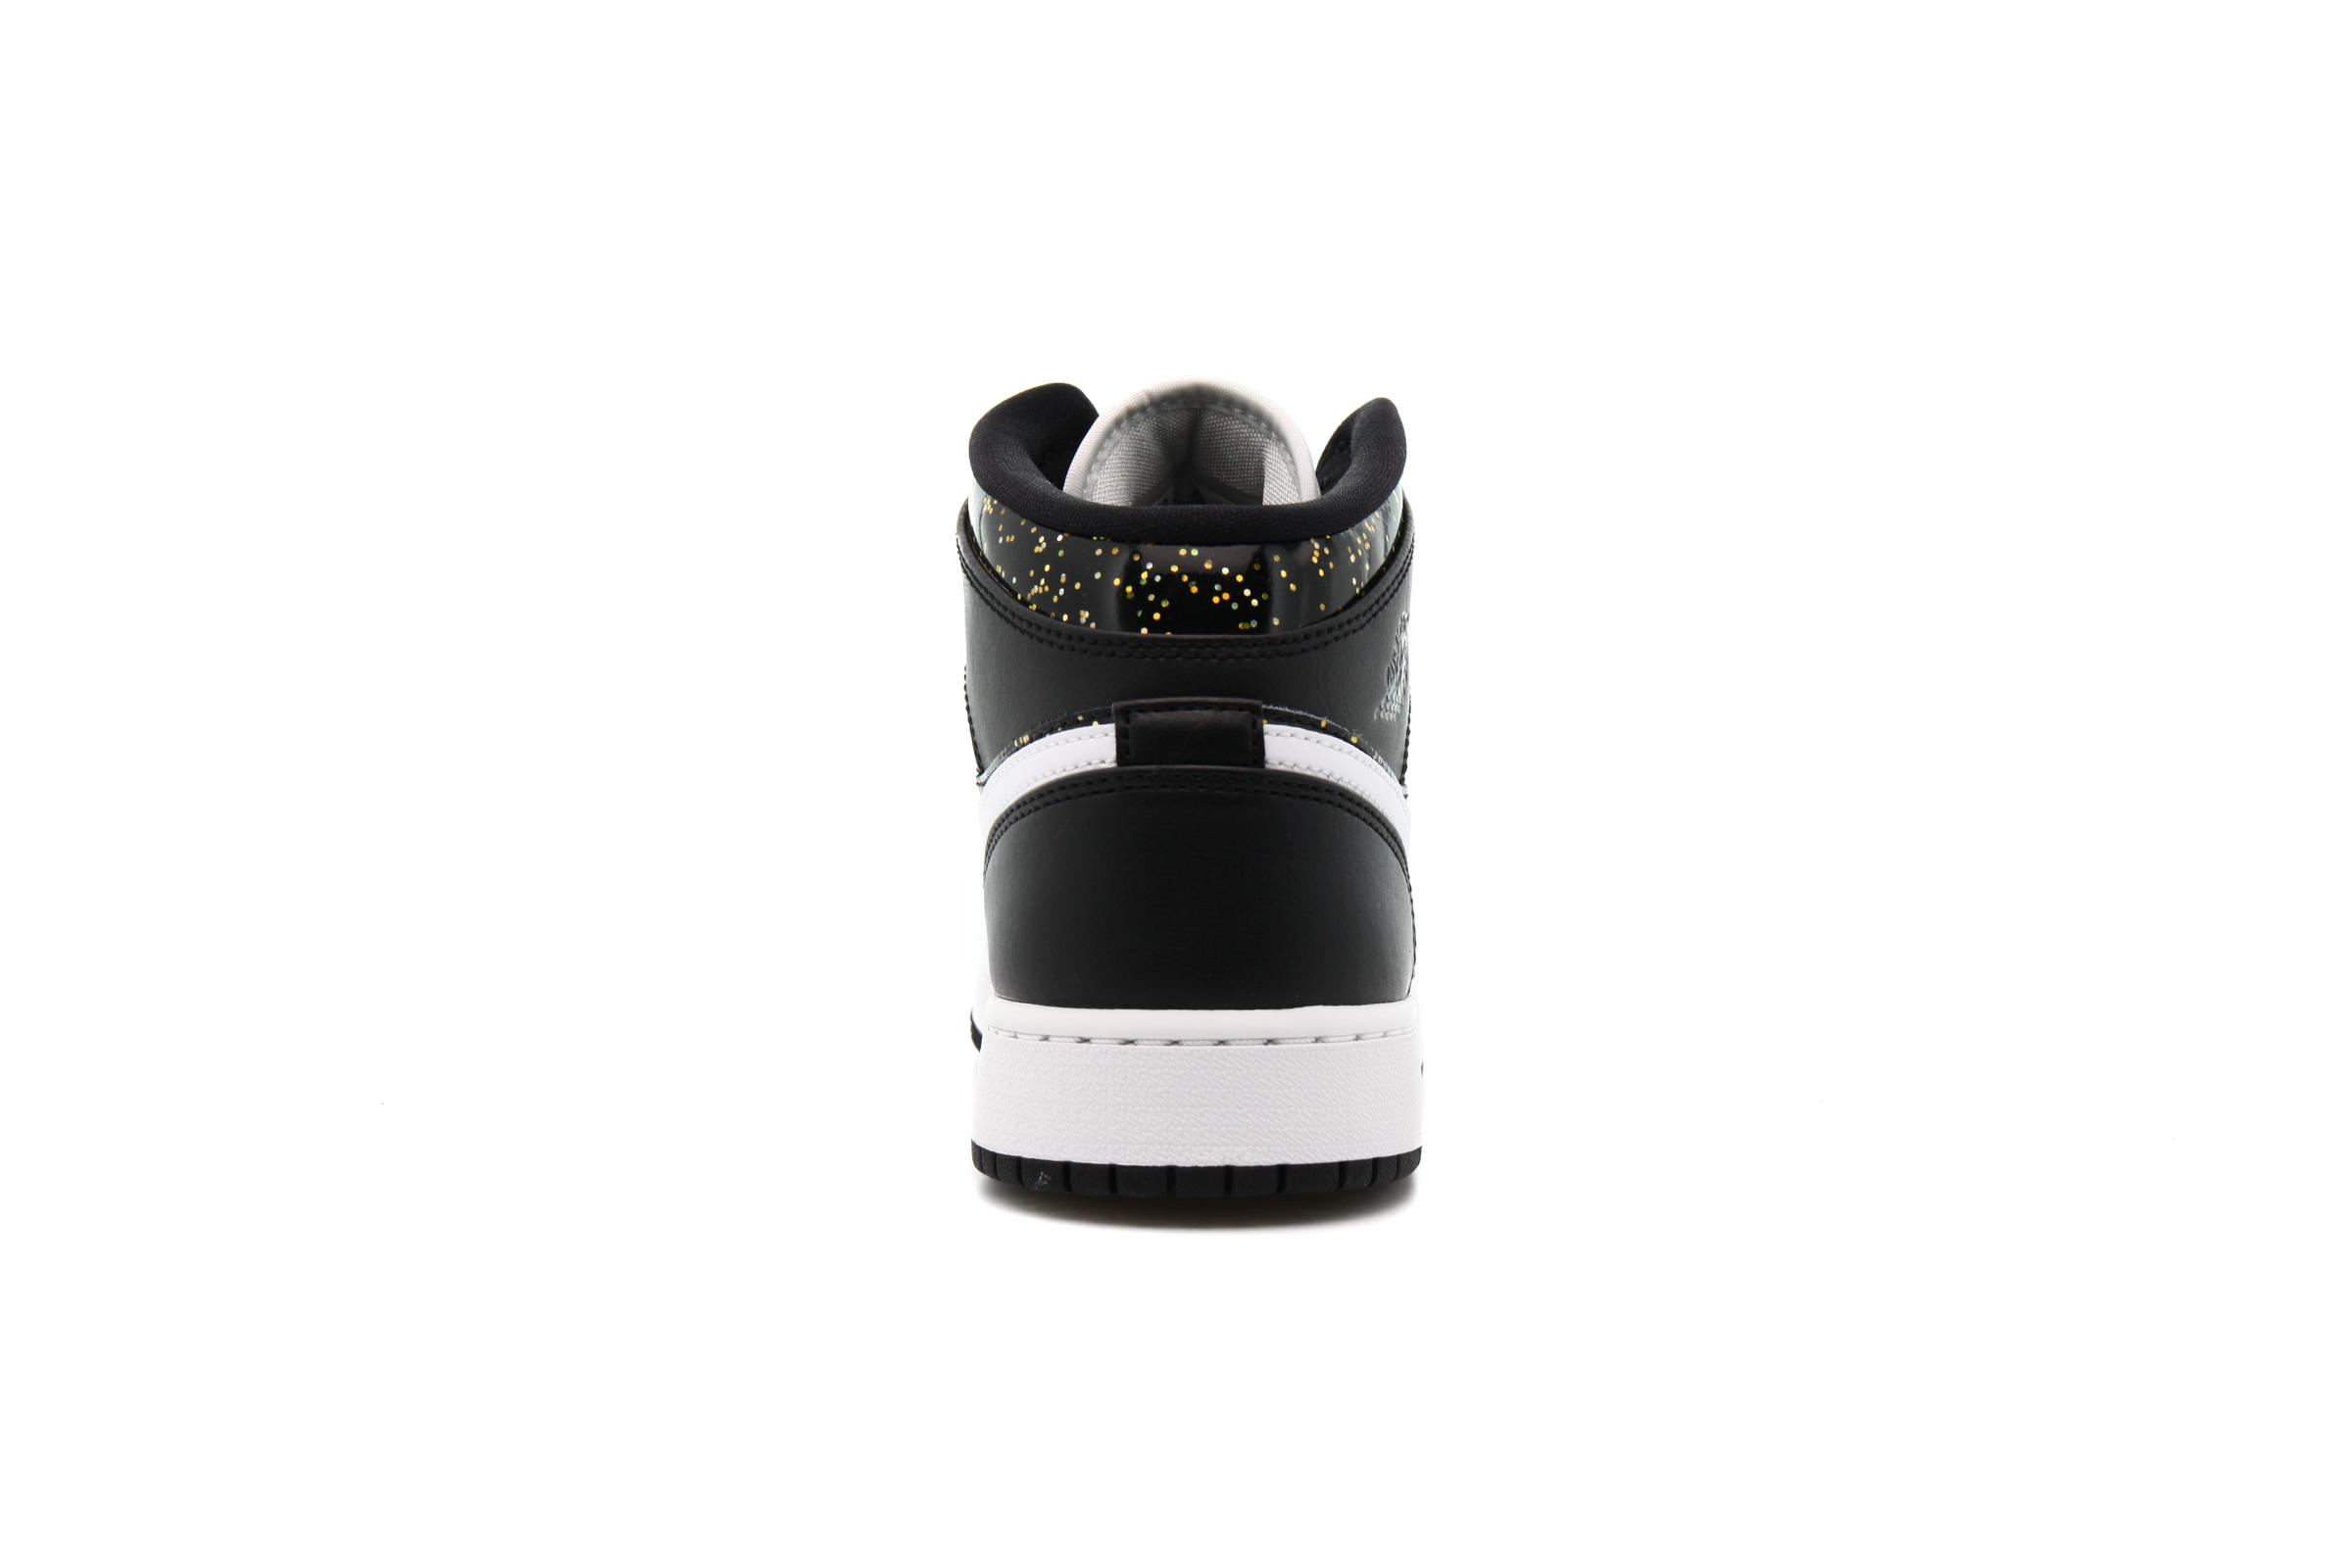 Air Jordan 1 MID SE (GS) "BLACK"